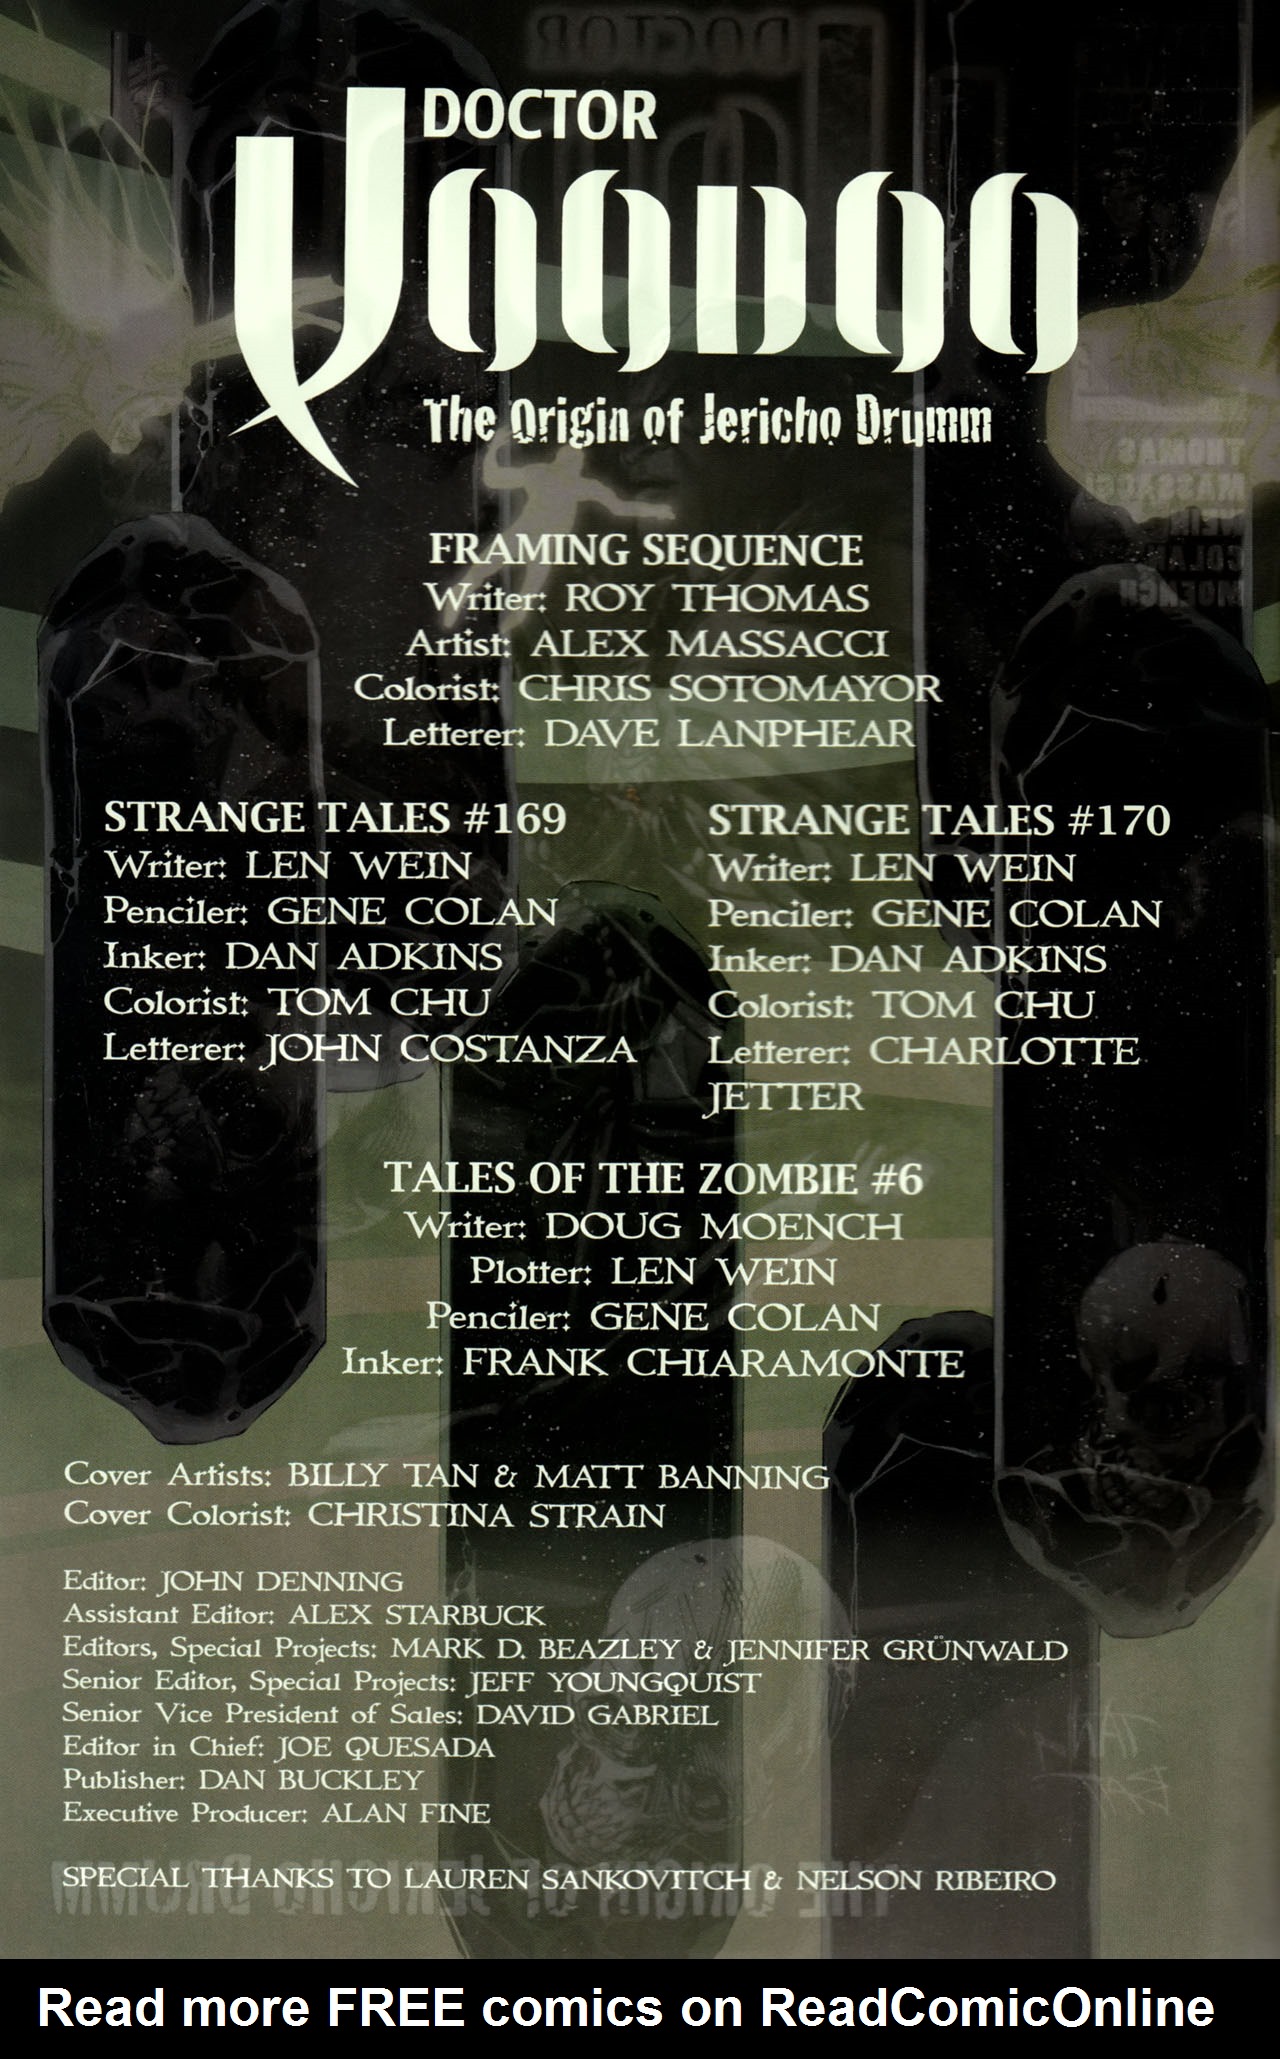 Read online Doctor Voodoo: The Origin of Jericho Drumm comic -  Issue # Full - 2